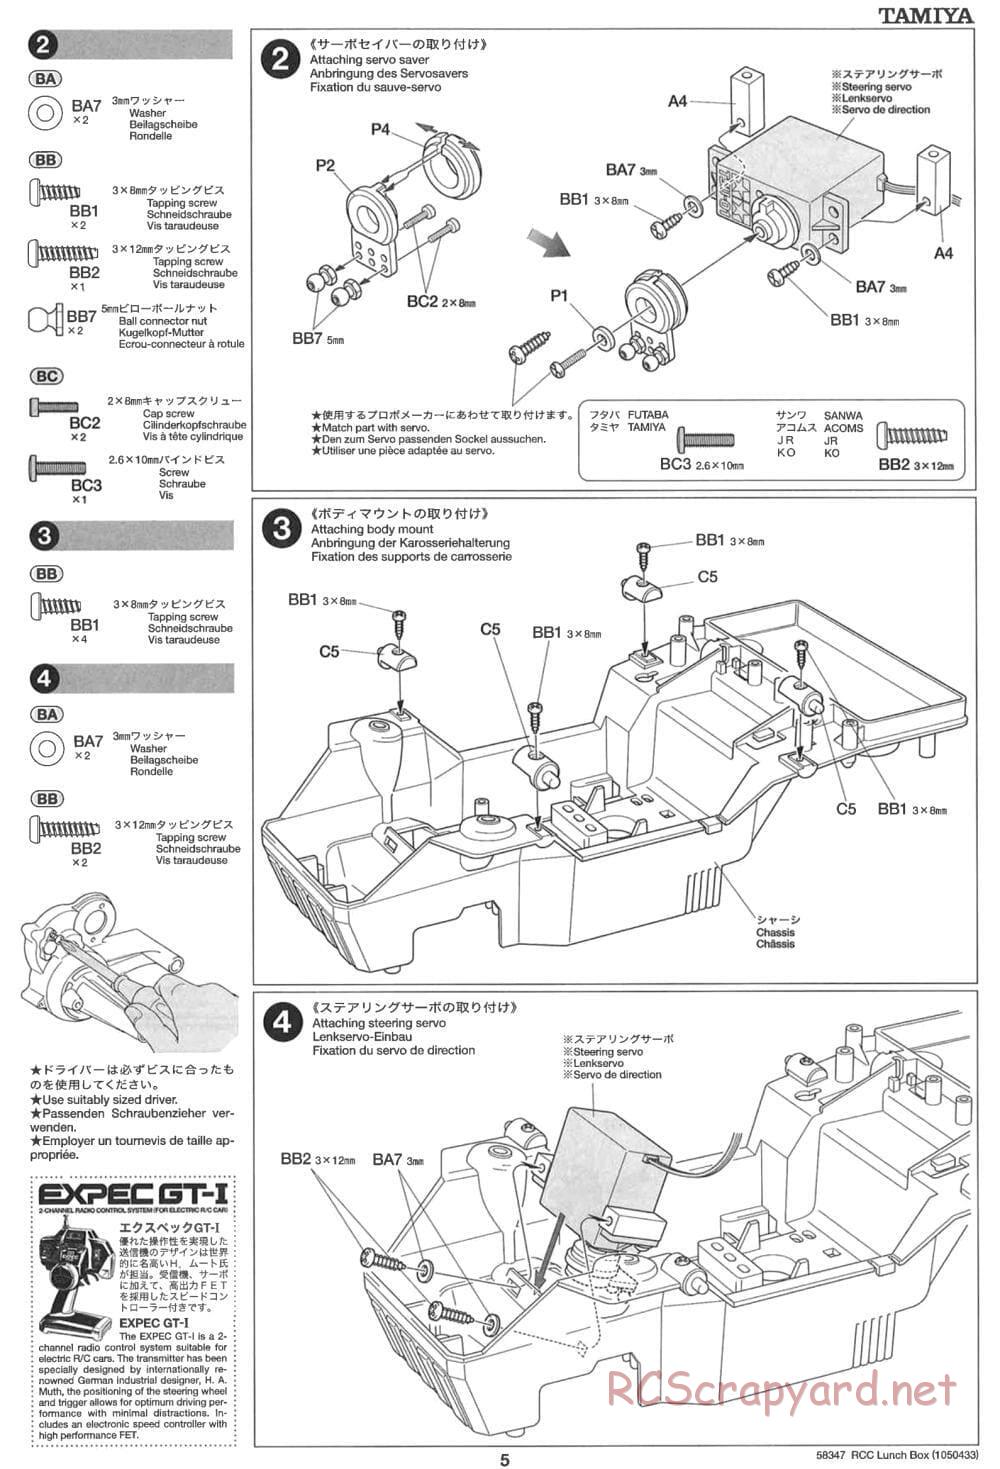 Tamiya - Vanessas Lunchbox - CW-01 Chassis - Manual - Page 5